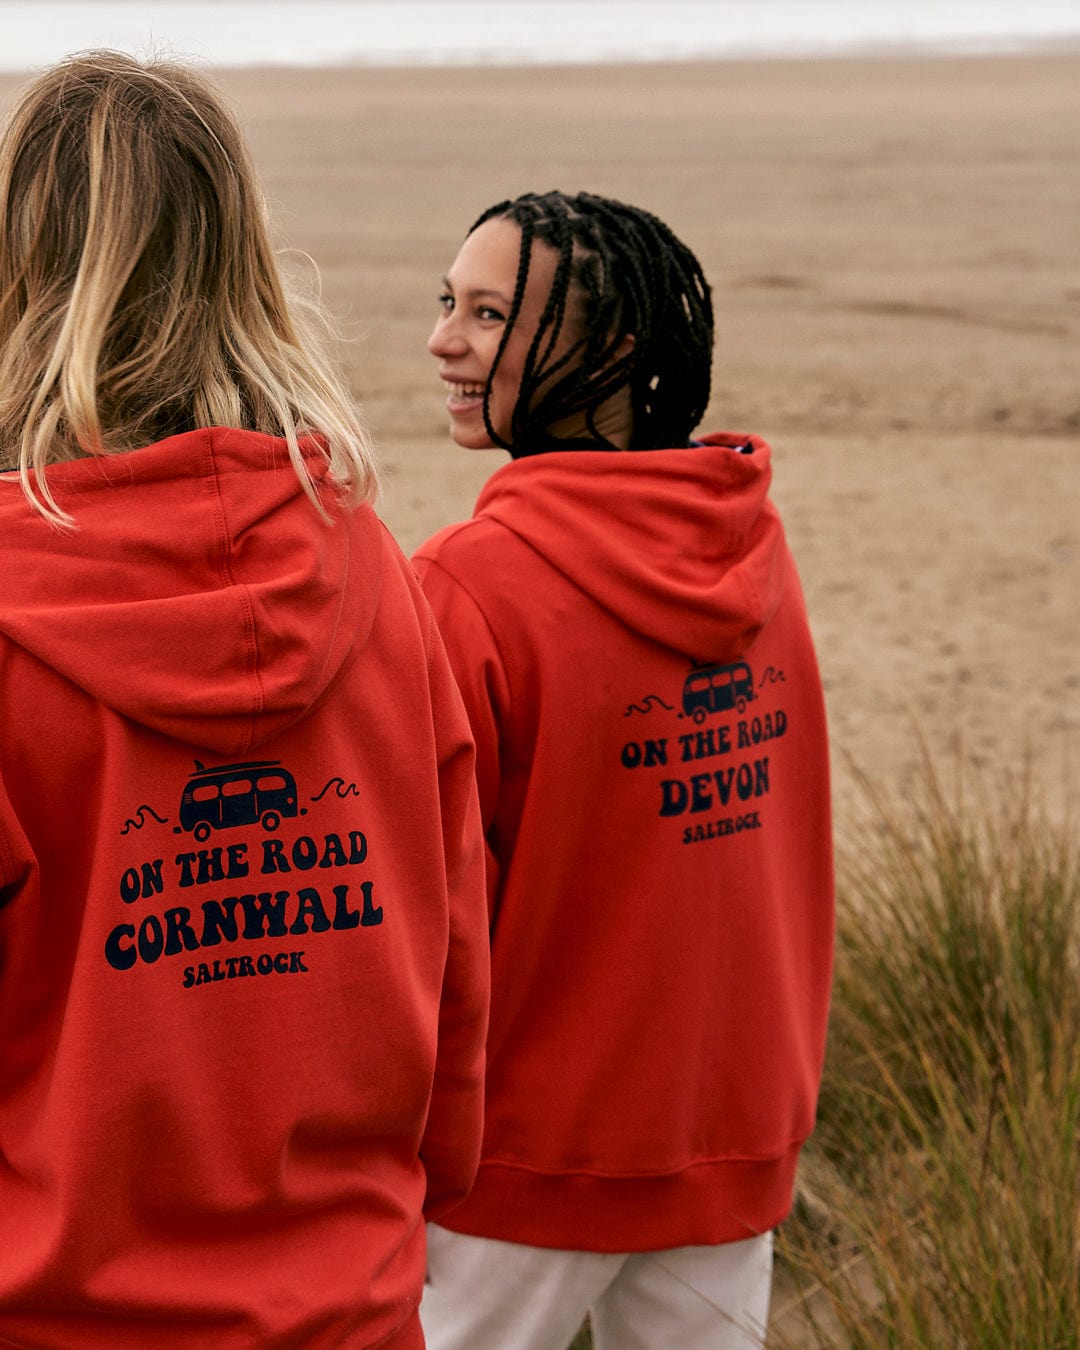 Two women wearing Saltrock hoodies standing on the beach.